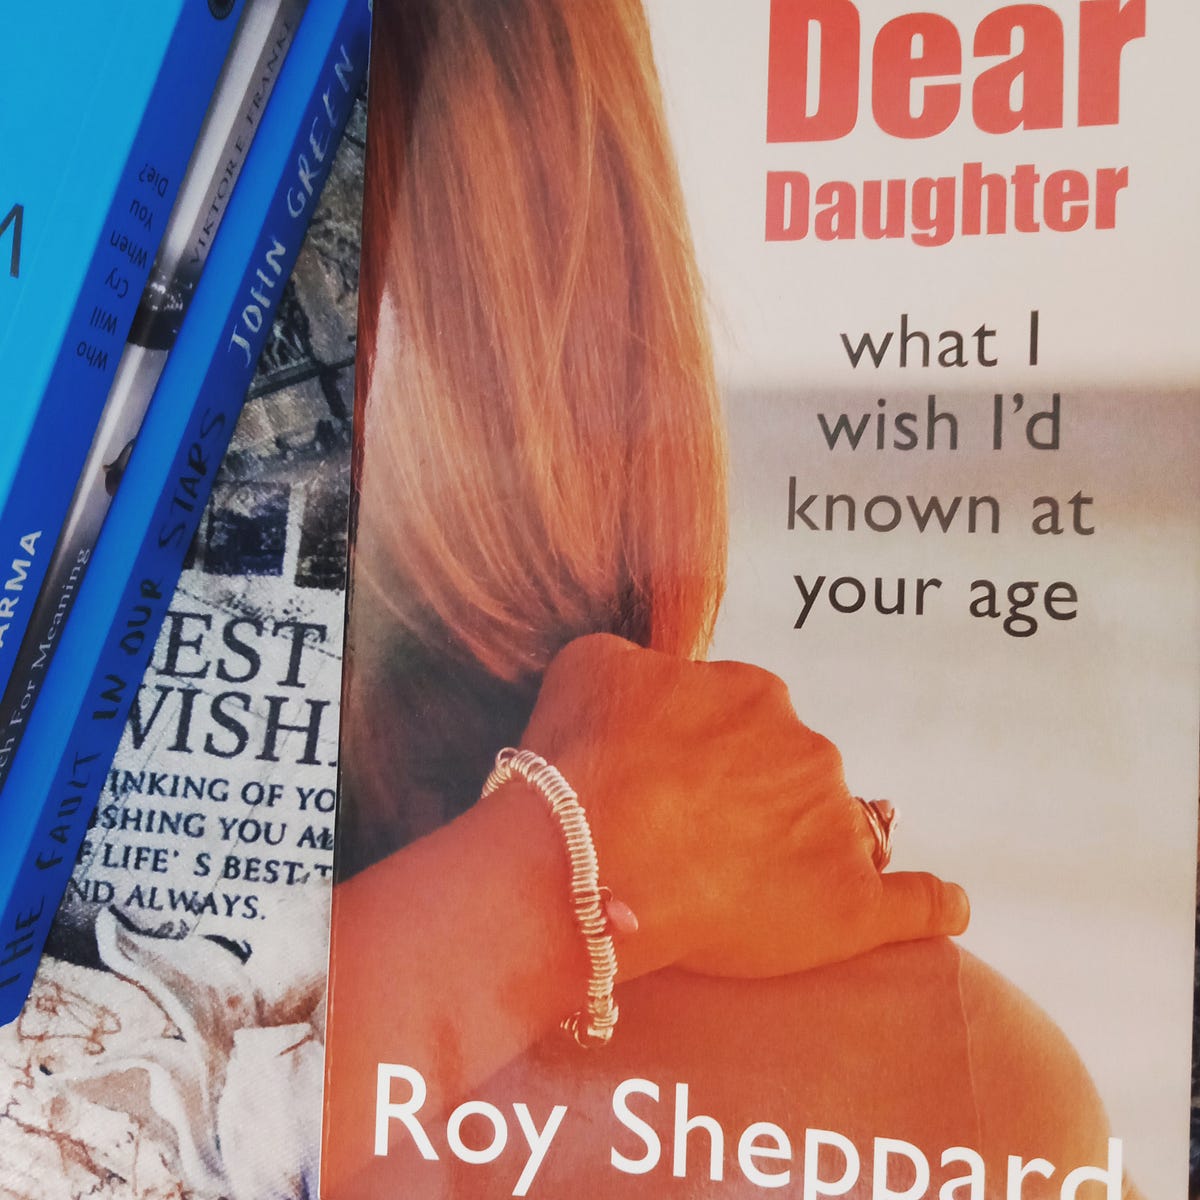 Dear Daughter Dear Daughter What I Wish I D Know At… By Jiya Shokeen Medium